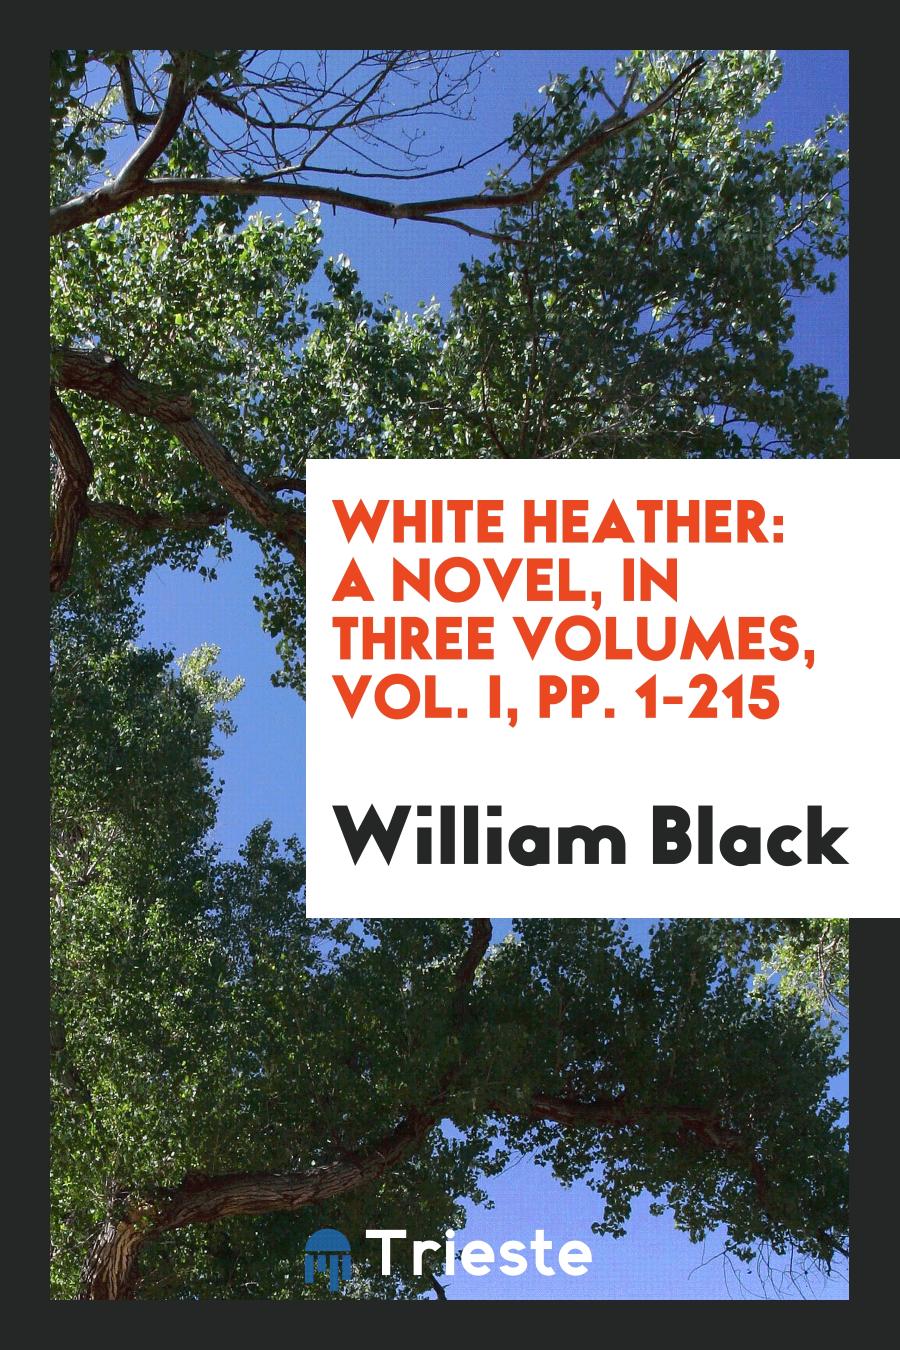 White Heather: A Novel, in Three Volumes, Vol. I, pp. 1-215